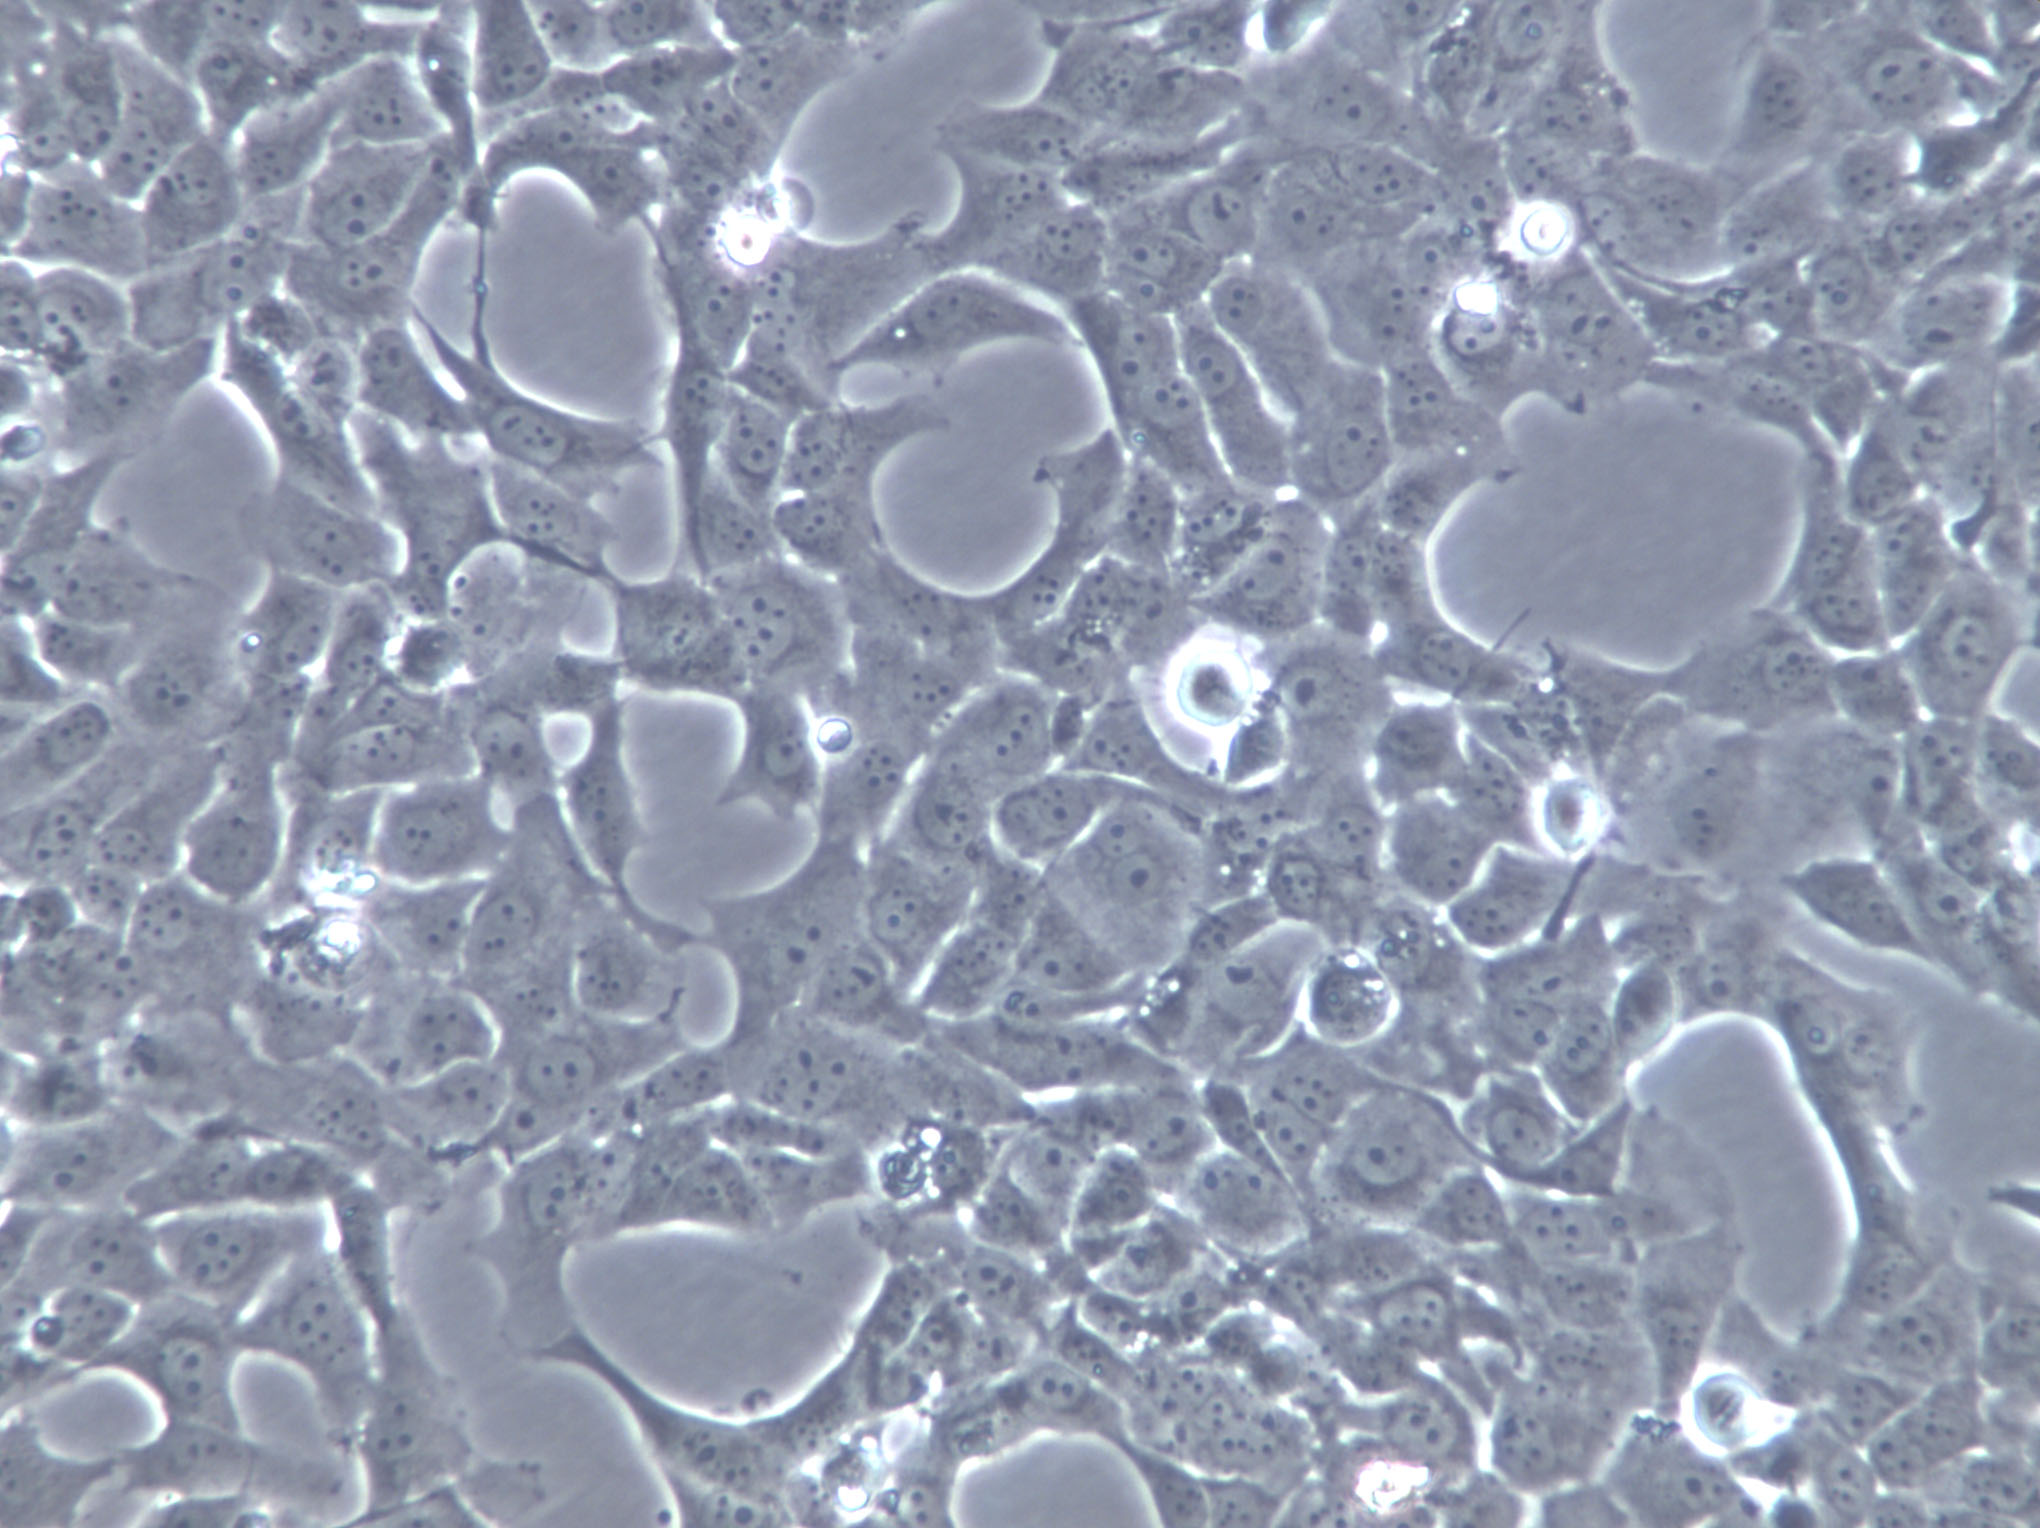 C-28/I2 Cells|人正常软骨克隆细胞,C-28/I2 Cells